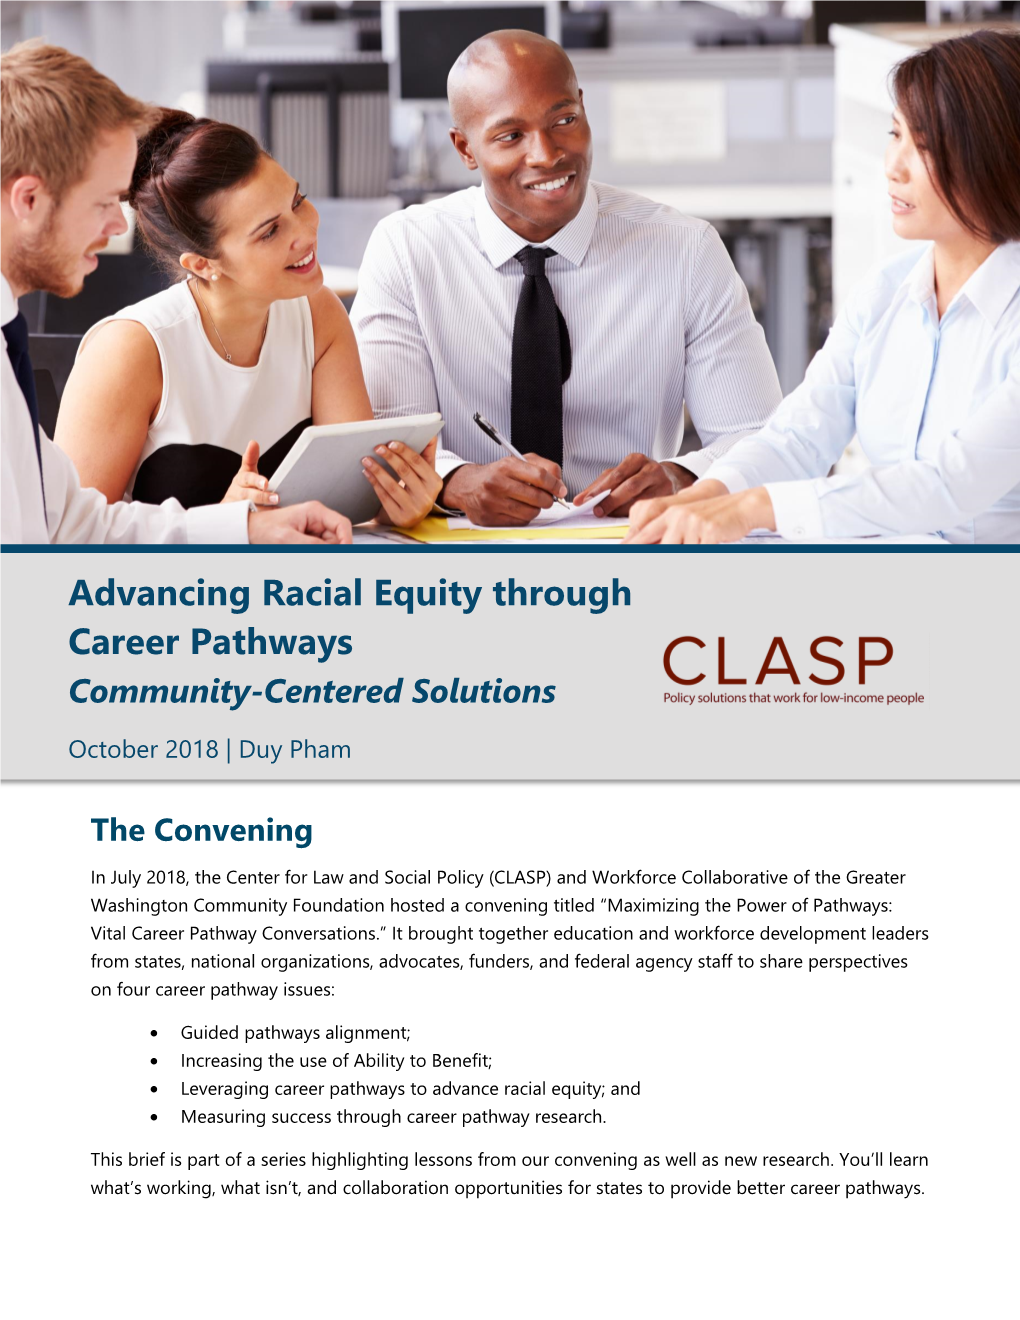 Advancing Racial Equity Through Career Pathways